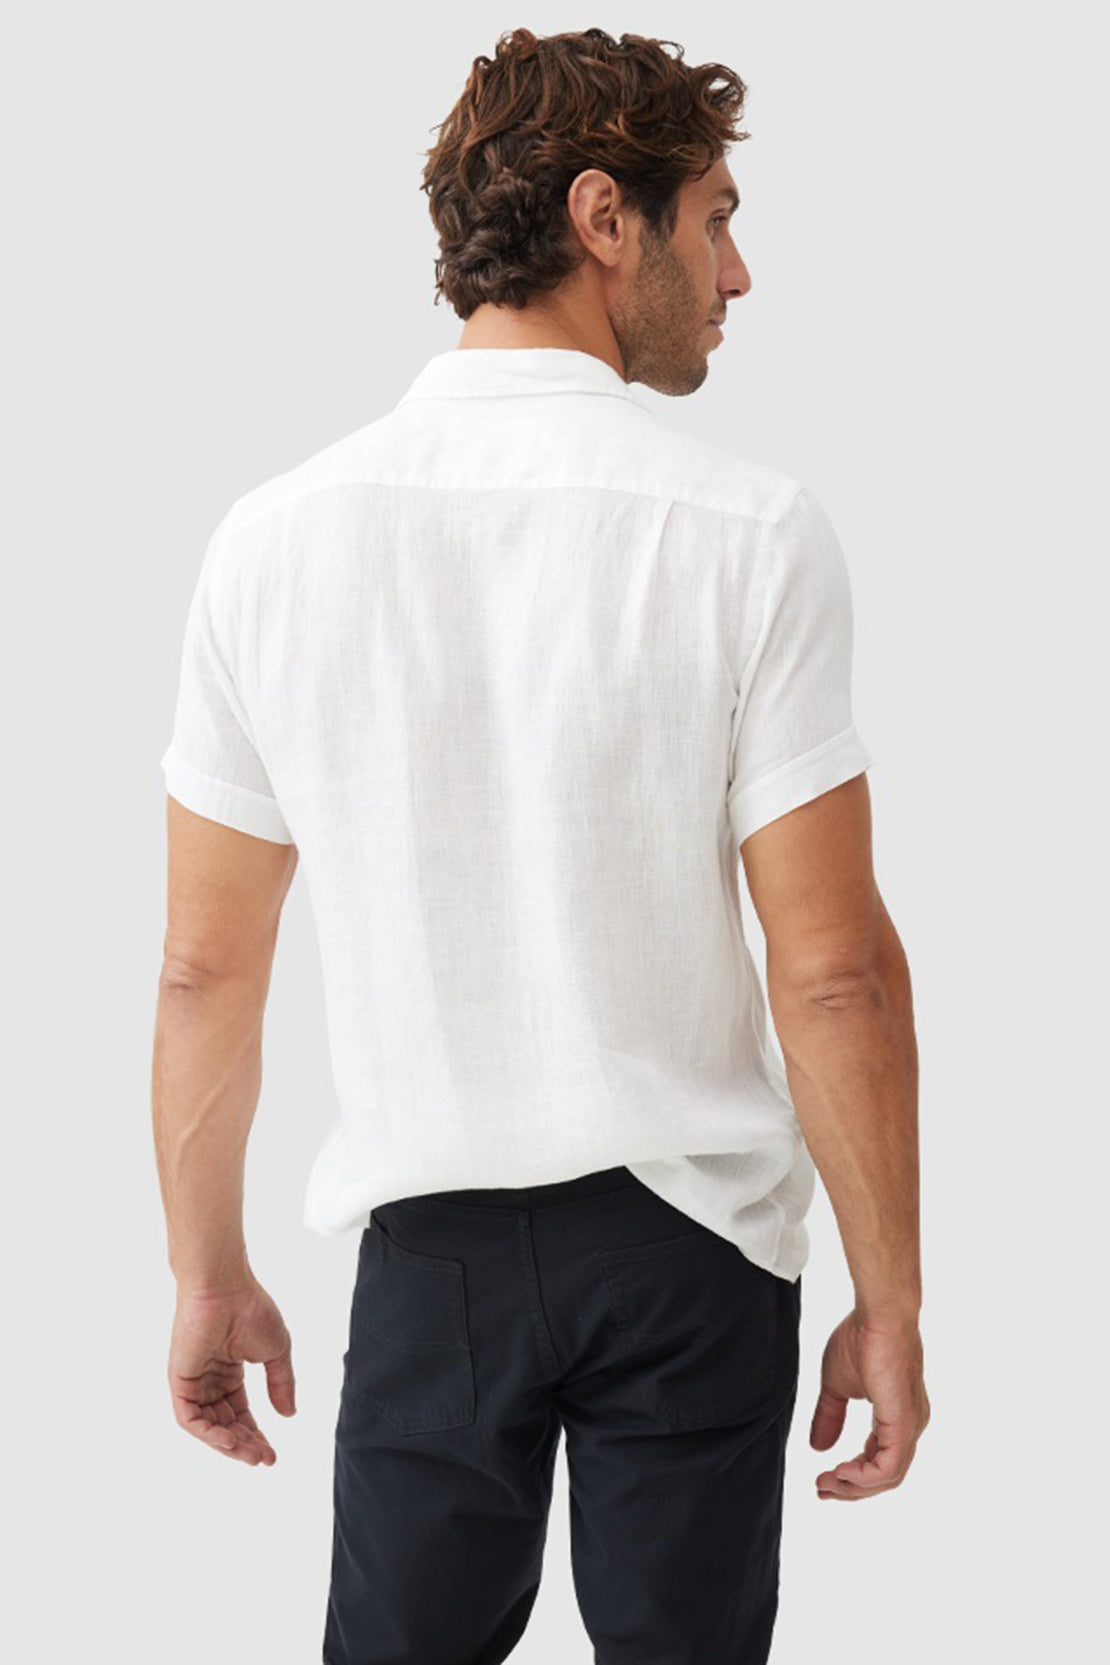 RODD & GUNN - PALM BEACH Short Sleeve Linen Shirt In Snow White LP6266